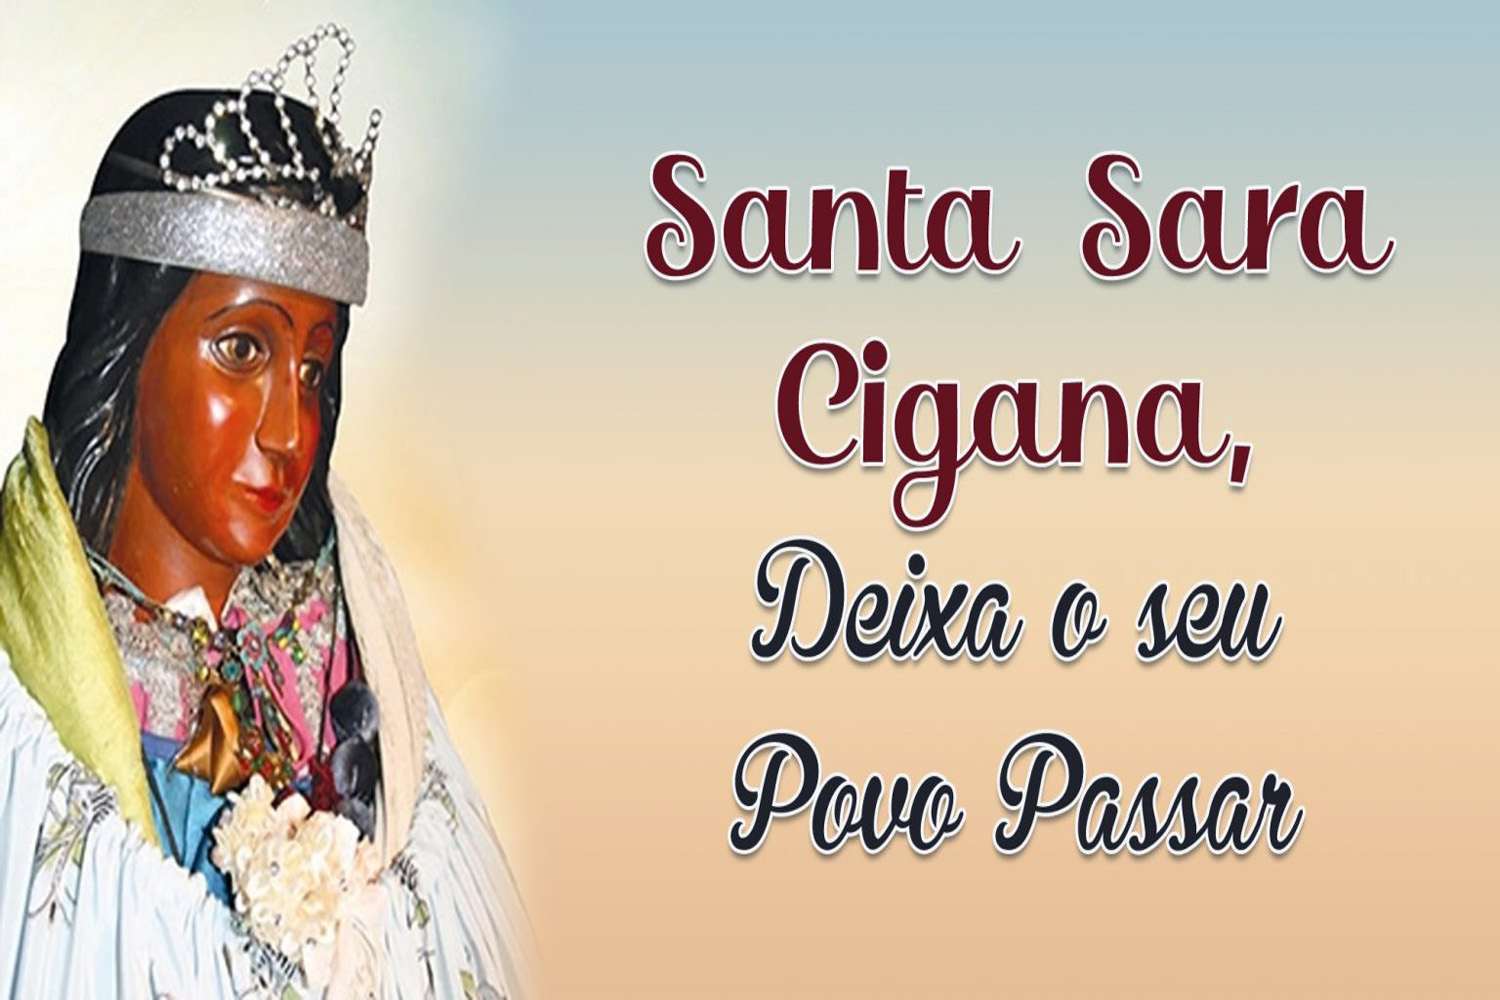 Santa Sara Cigana, Deixa o seu Povo Passar